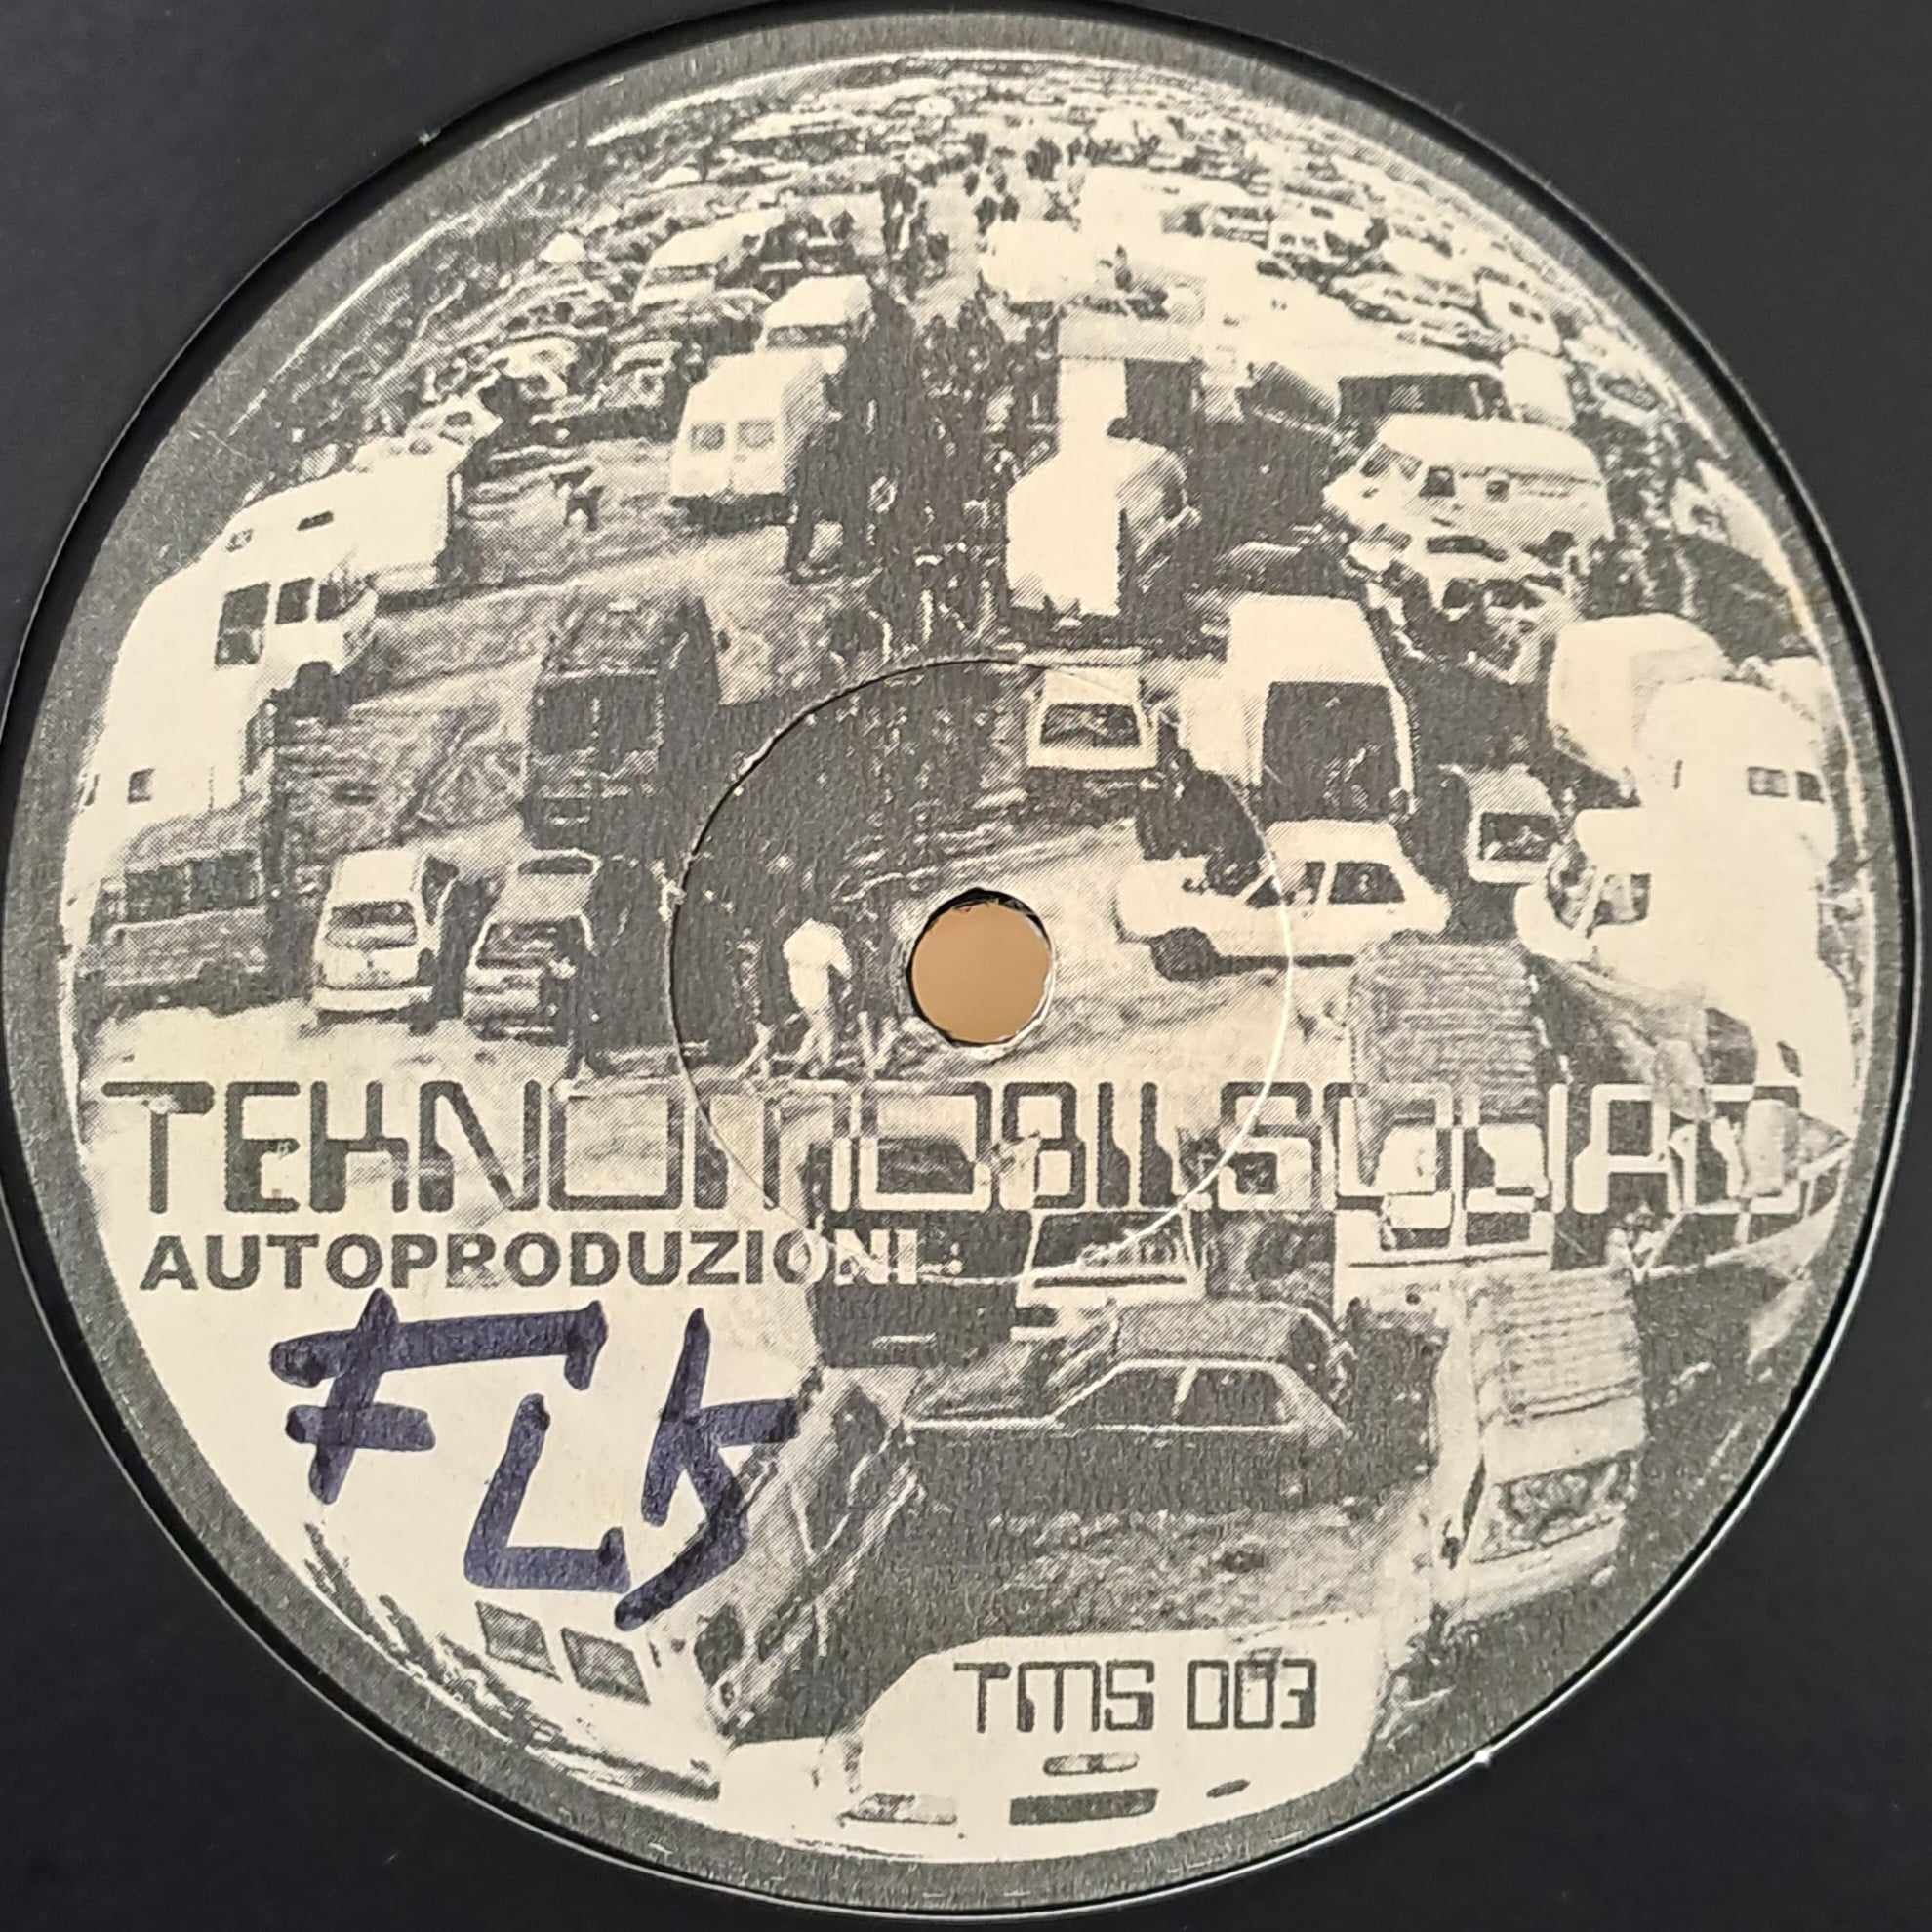 Tekno Mobil Squad 003 - vinyle freetekno